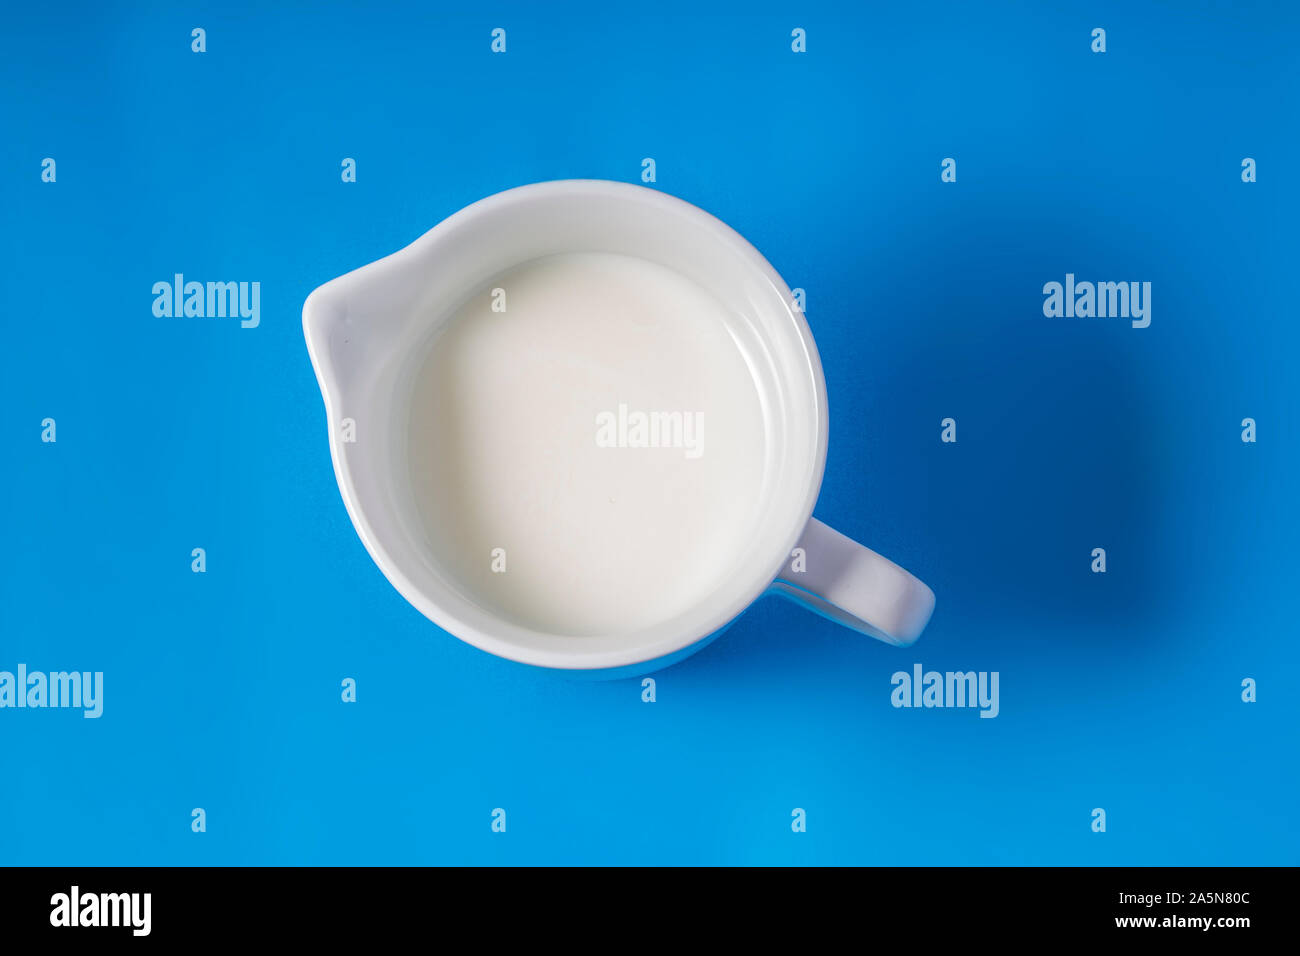 https://c8.alamy.com/comp/2A5N80C/porcelain-white-creamer-dispenser-pitcher-with-cream-on-a-blue-background-2A5N80C.jpg